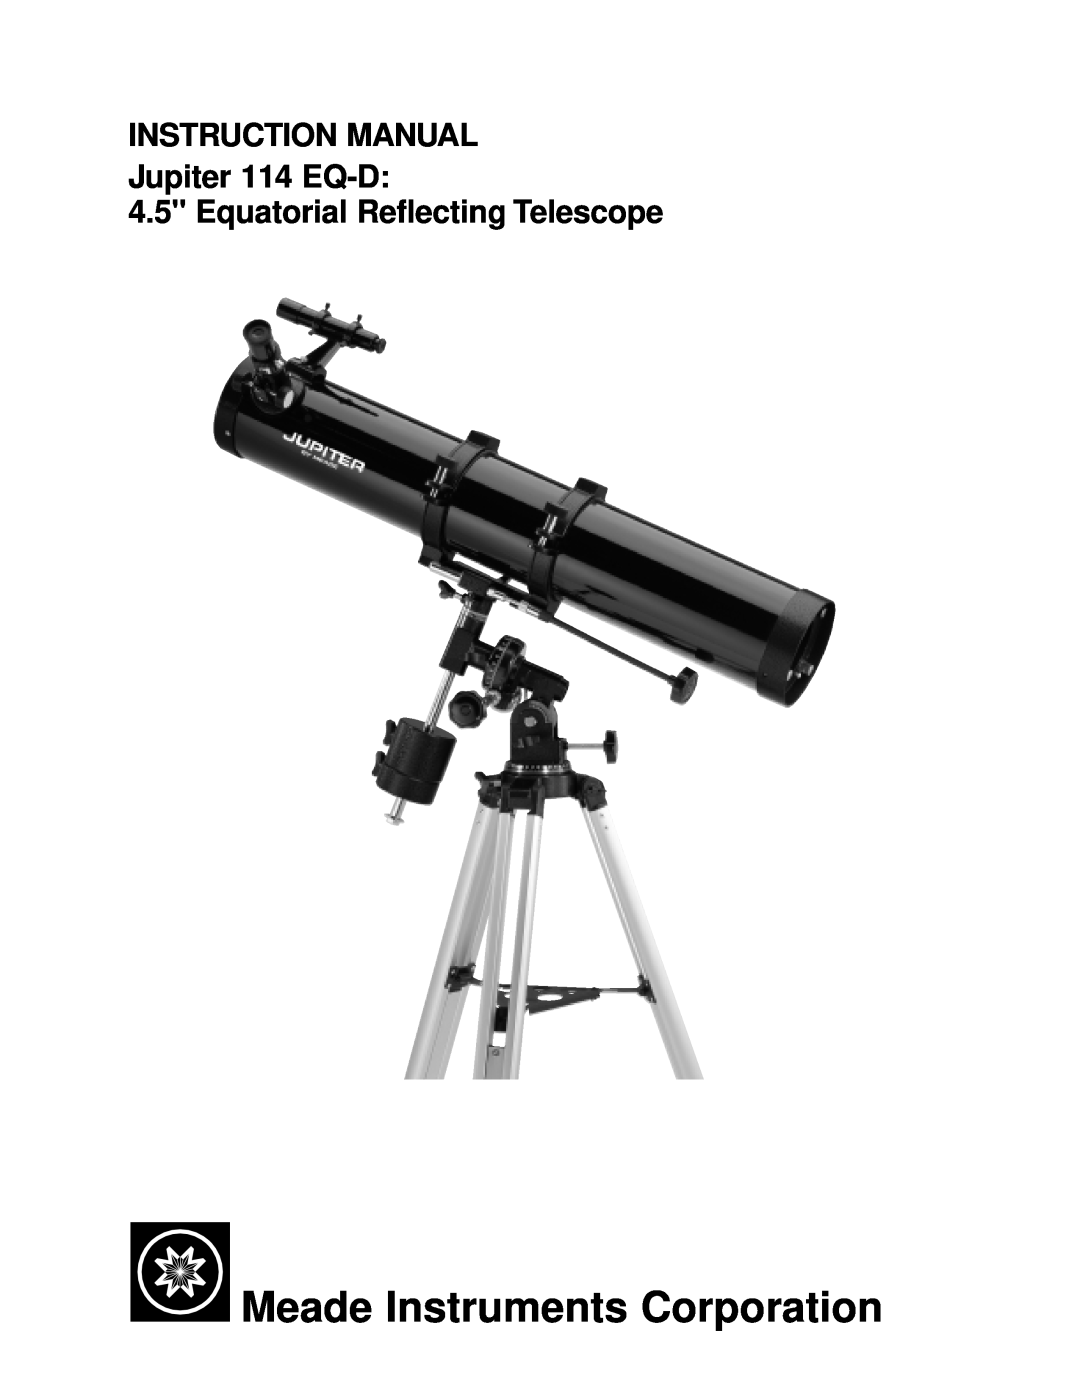 Meade 114 EQ-D instruction manual Equatorial Reflecting Telescope, Meade Instruments Corporation 